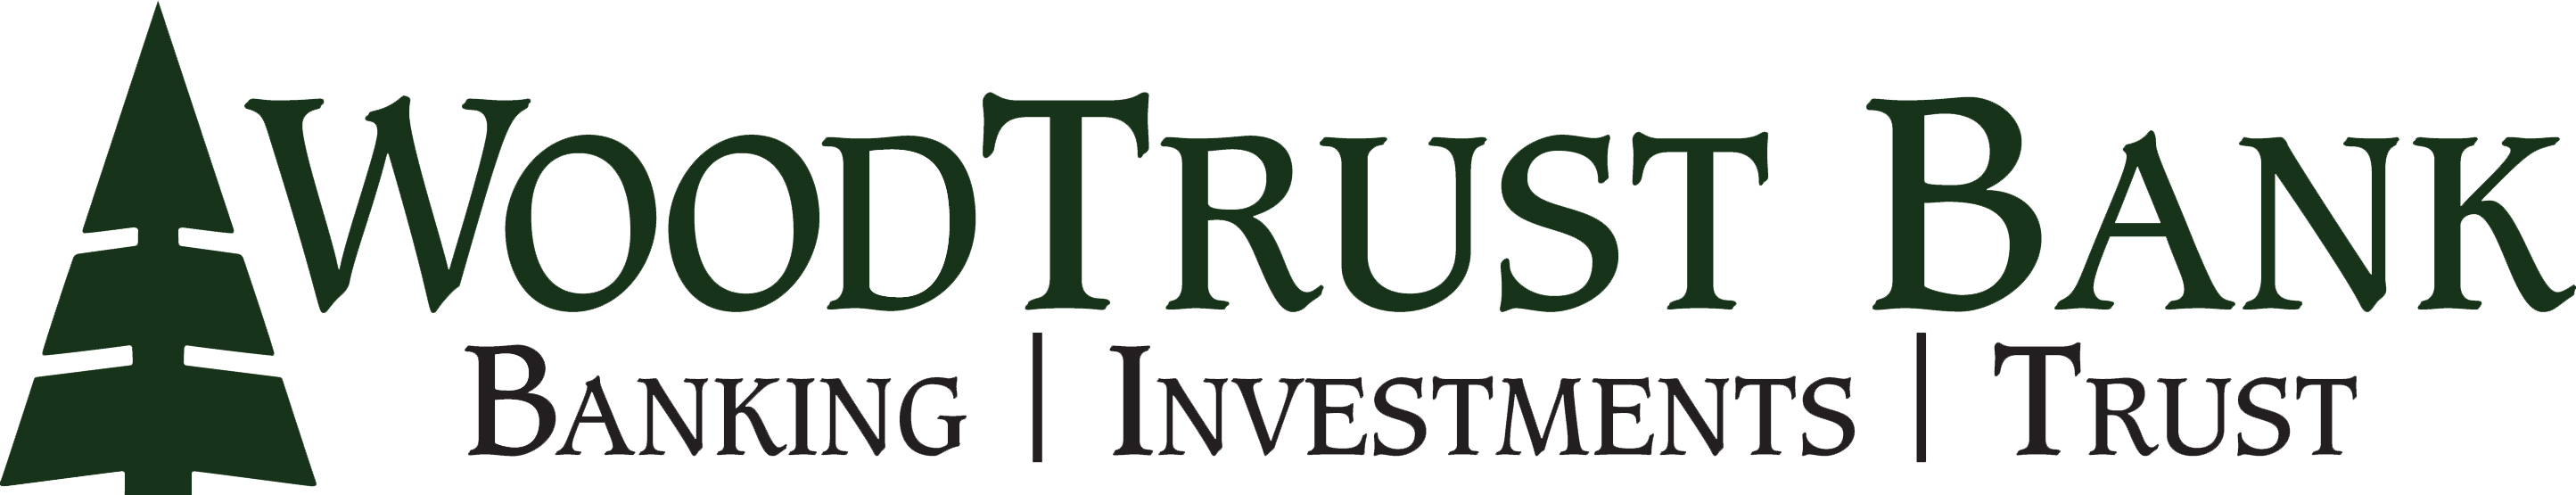 Wood Trust Bank